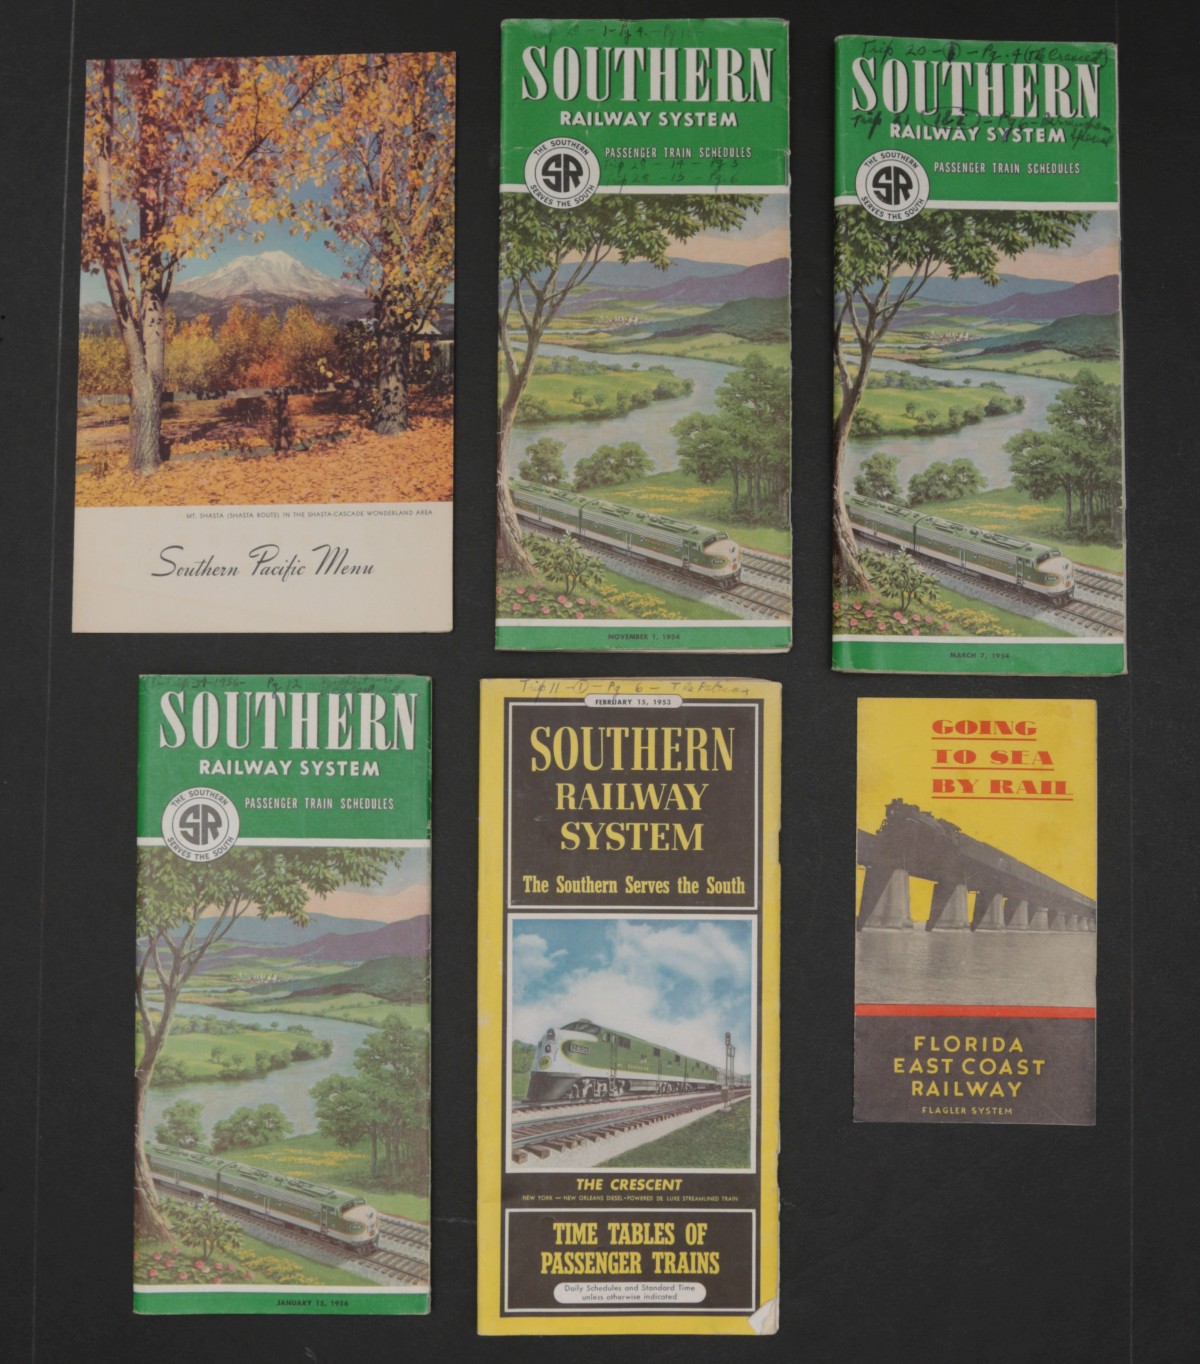 22 PIECES OF SOUTHERN RAILWAY SYSTEM EPHEMERA